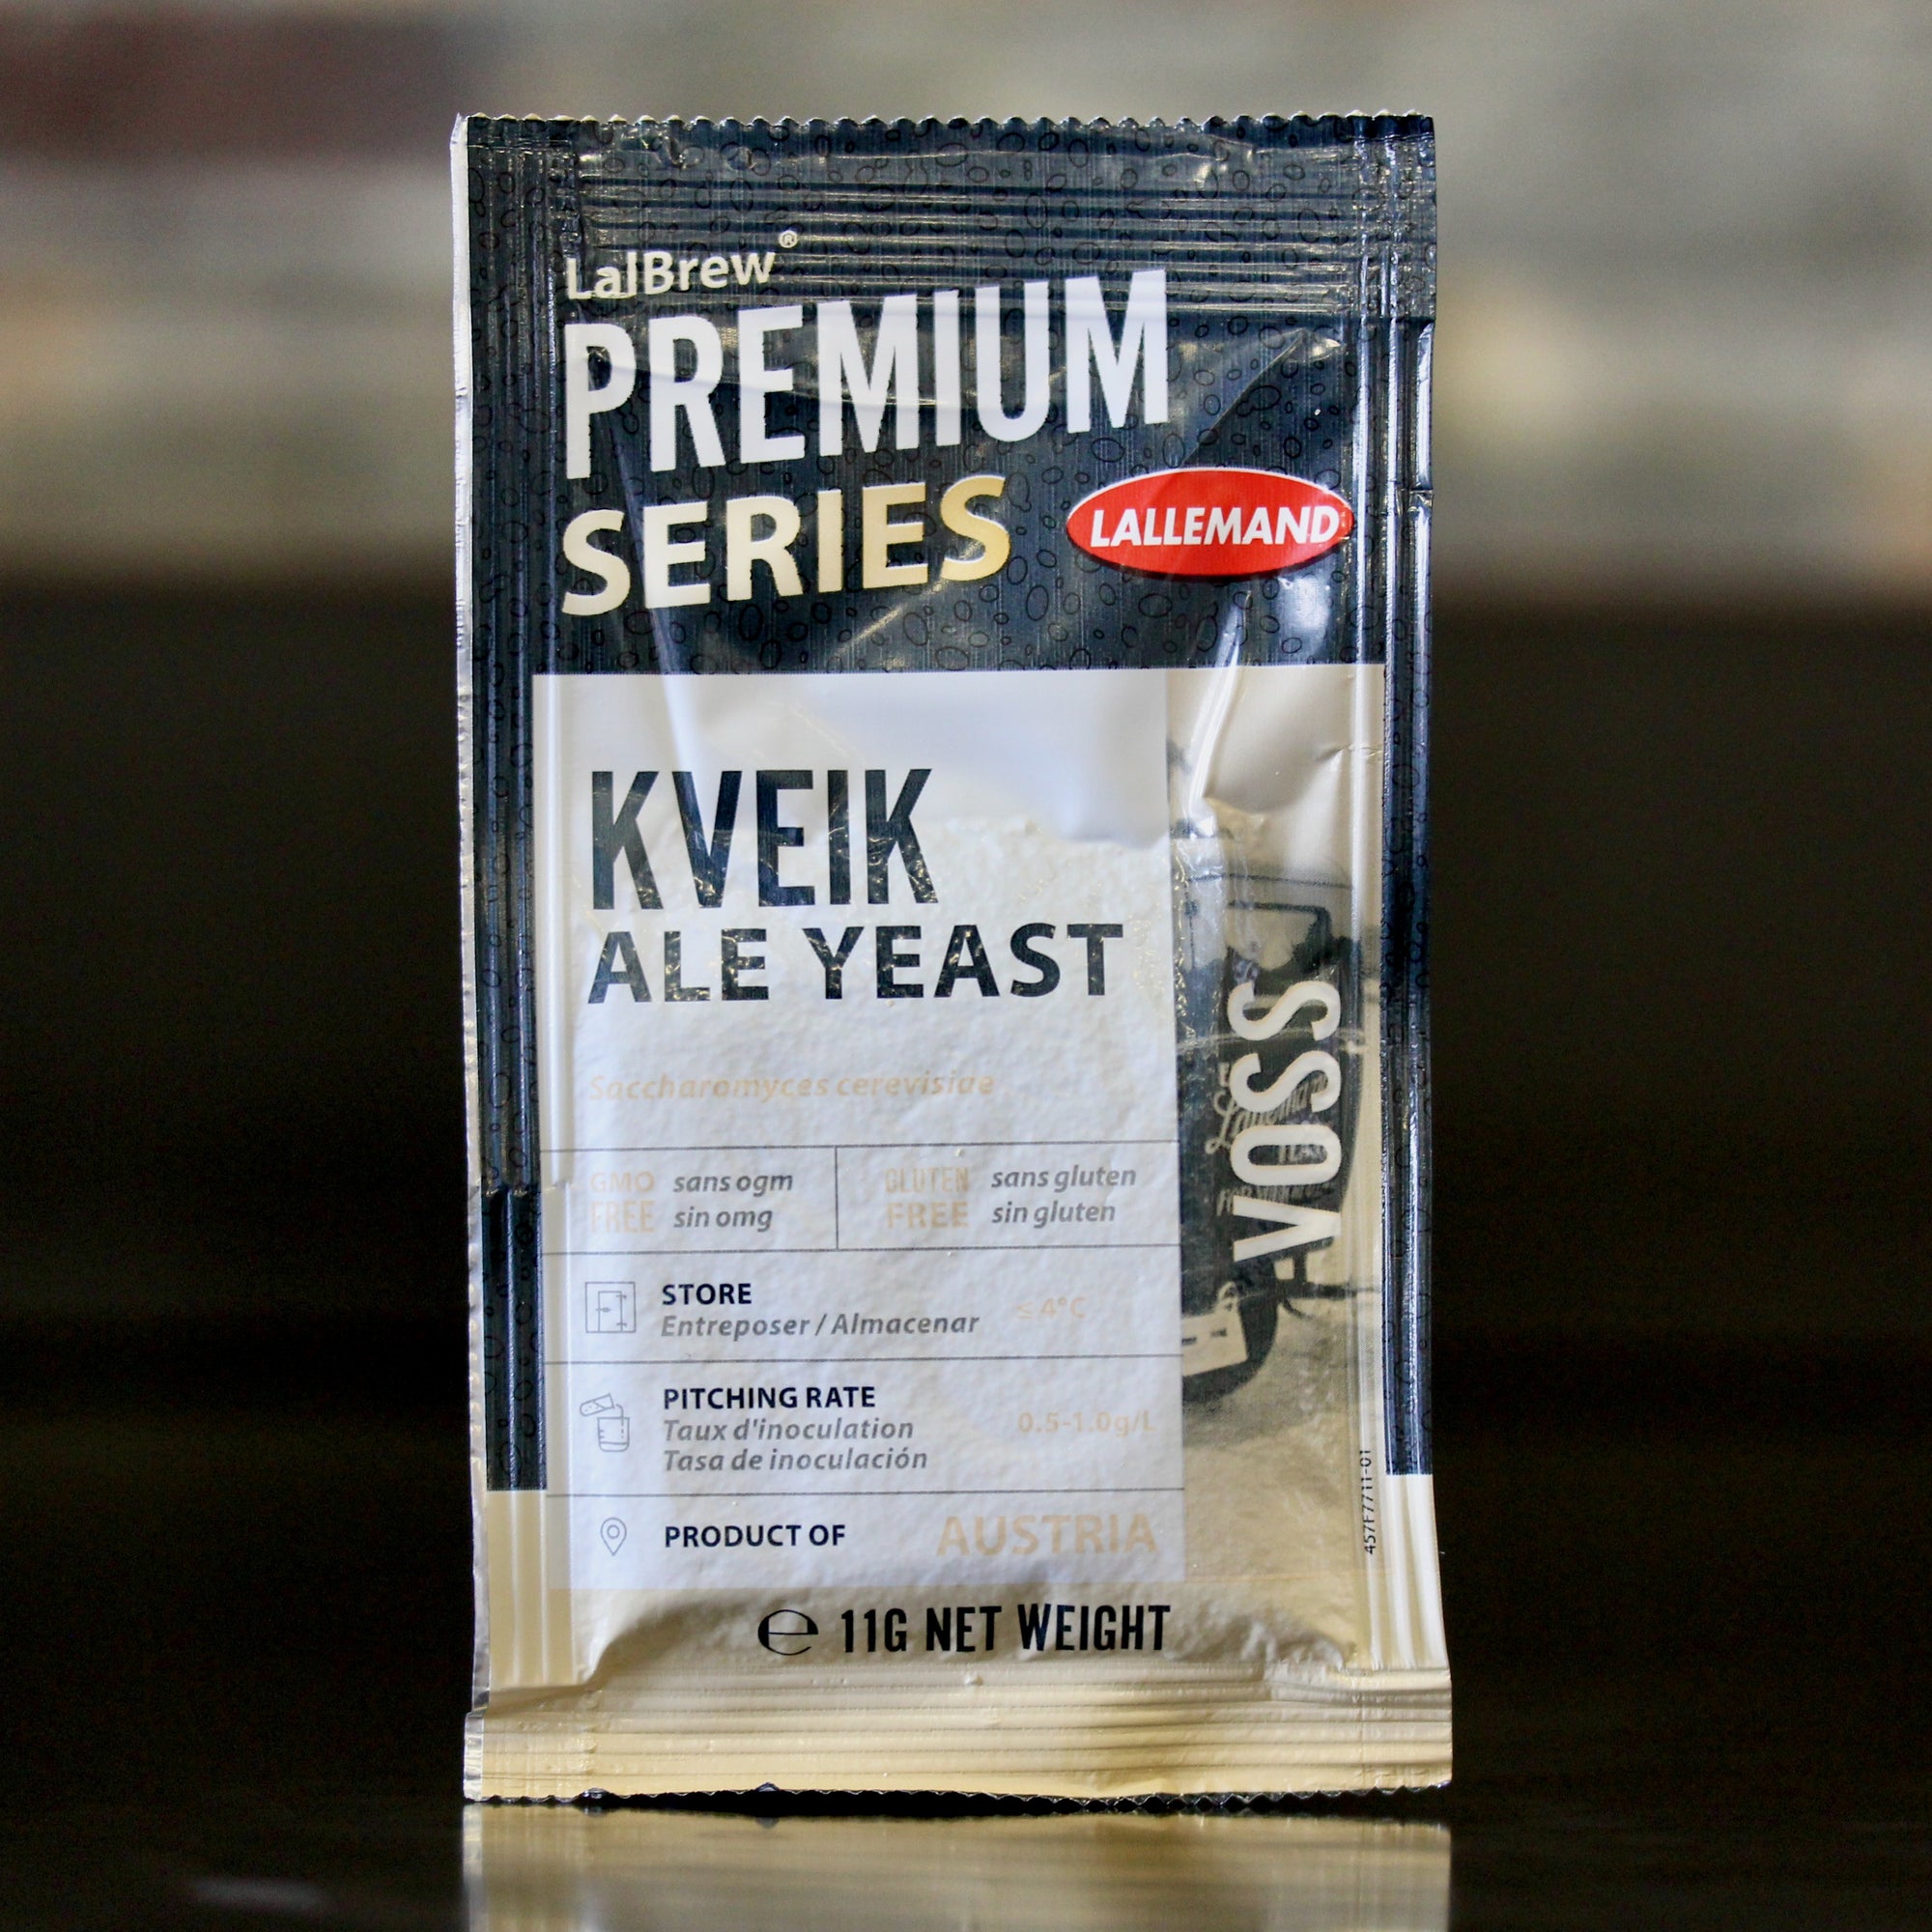 Voss Kveik Dry Ale Yeast